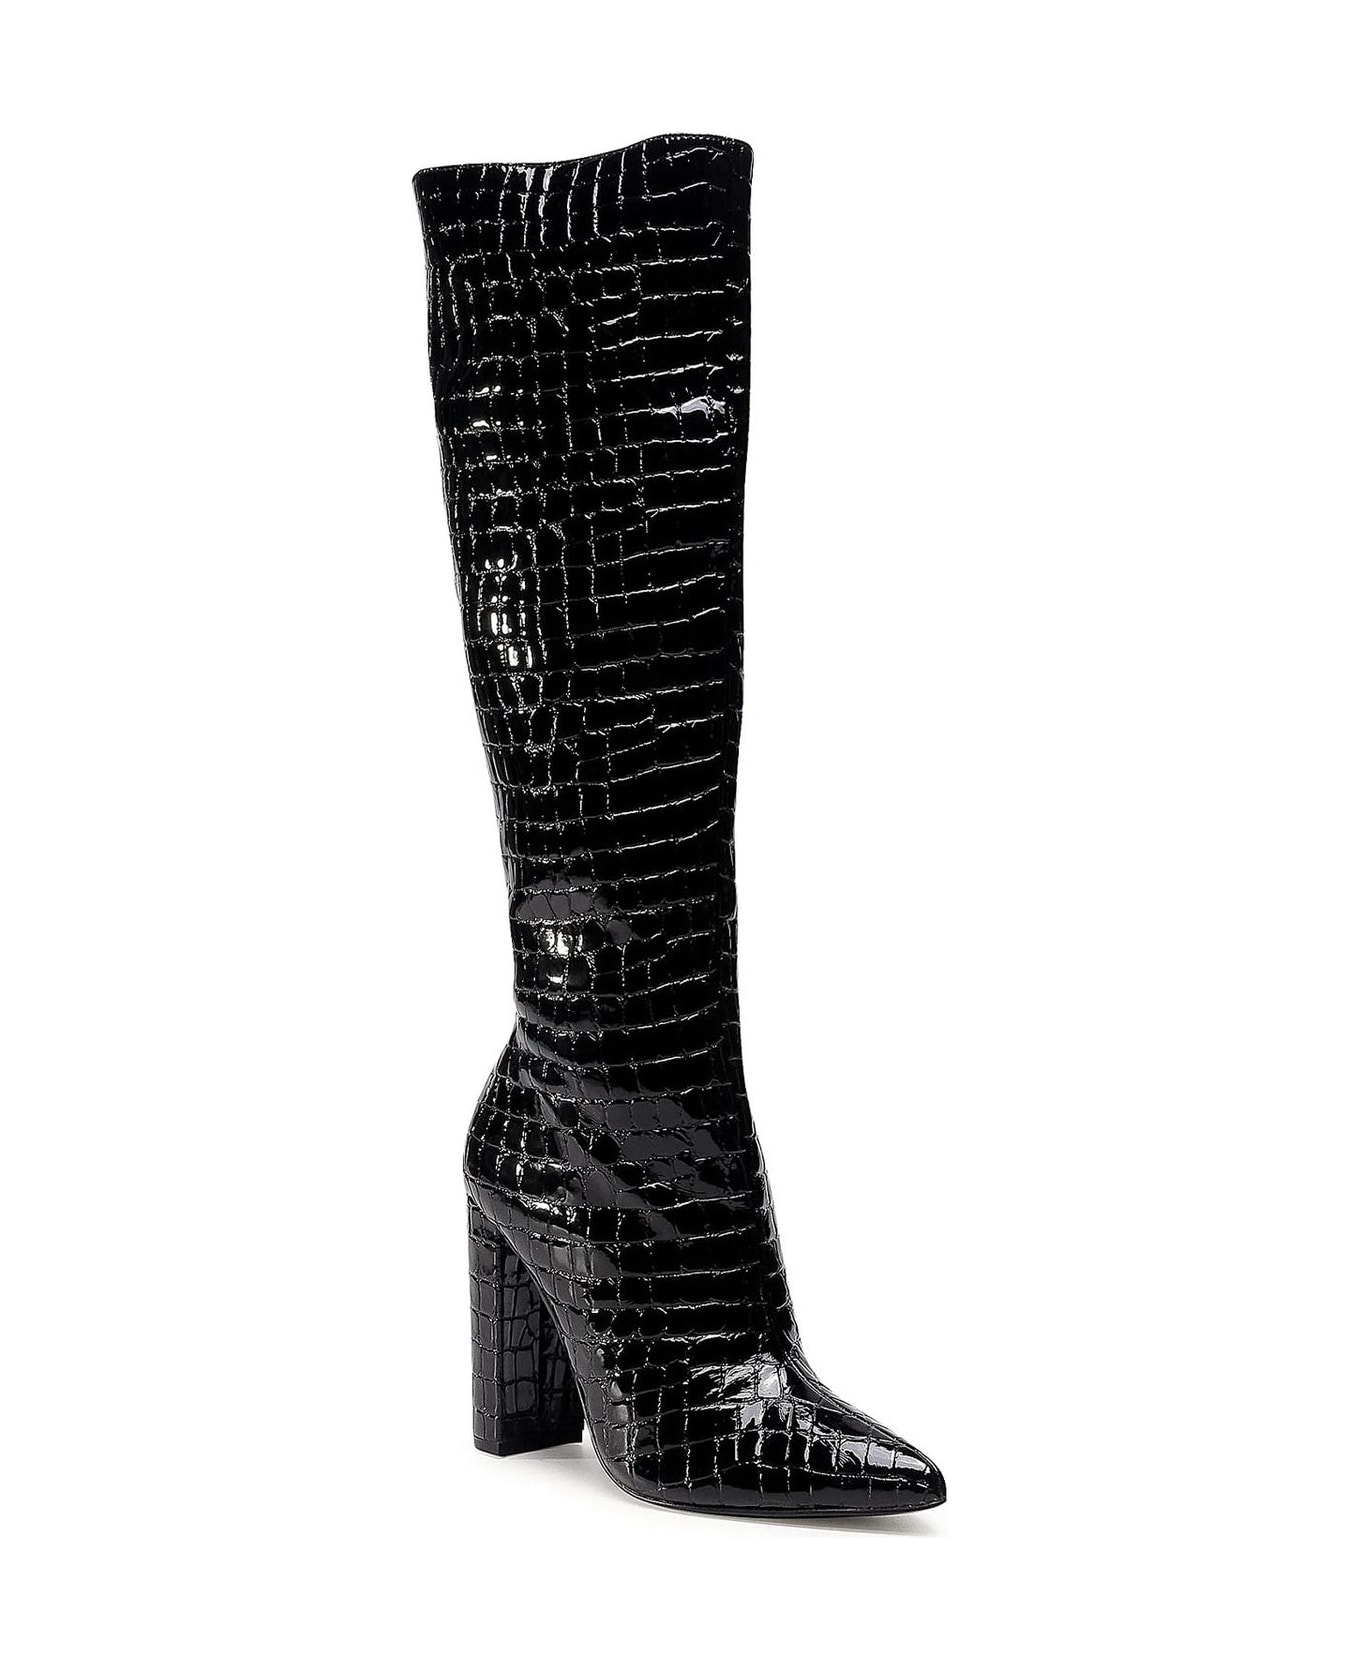 Steve Madden Leather Boots - Black